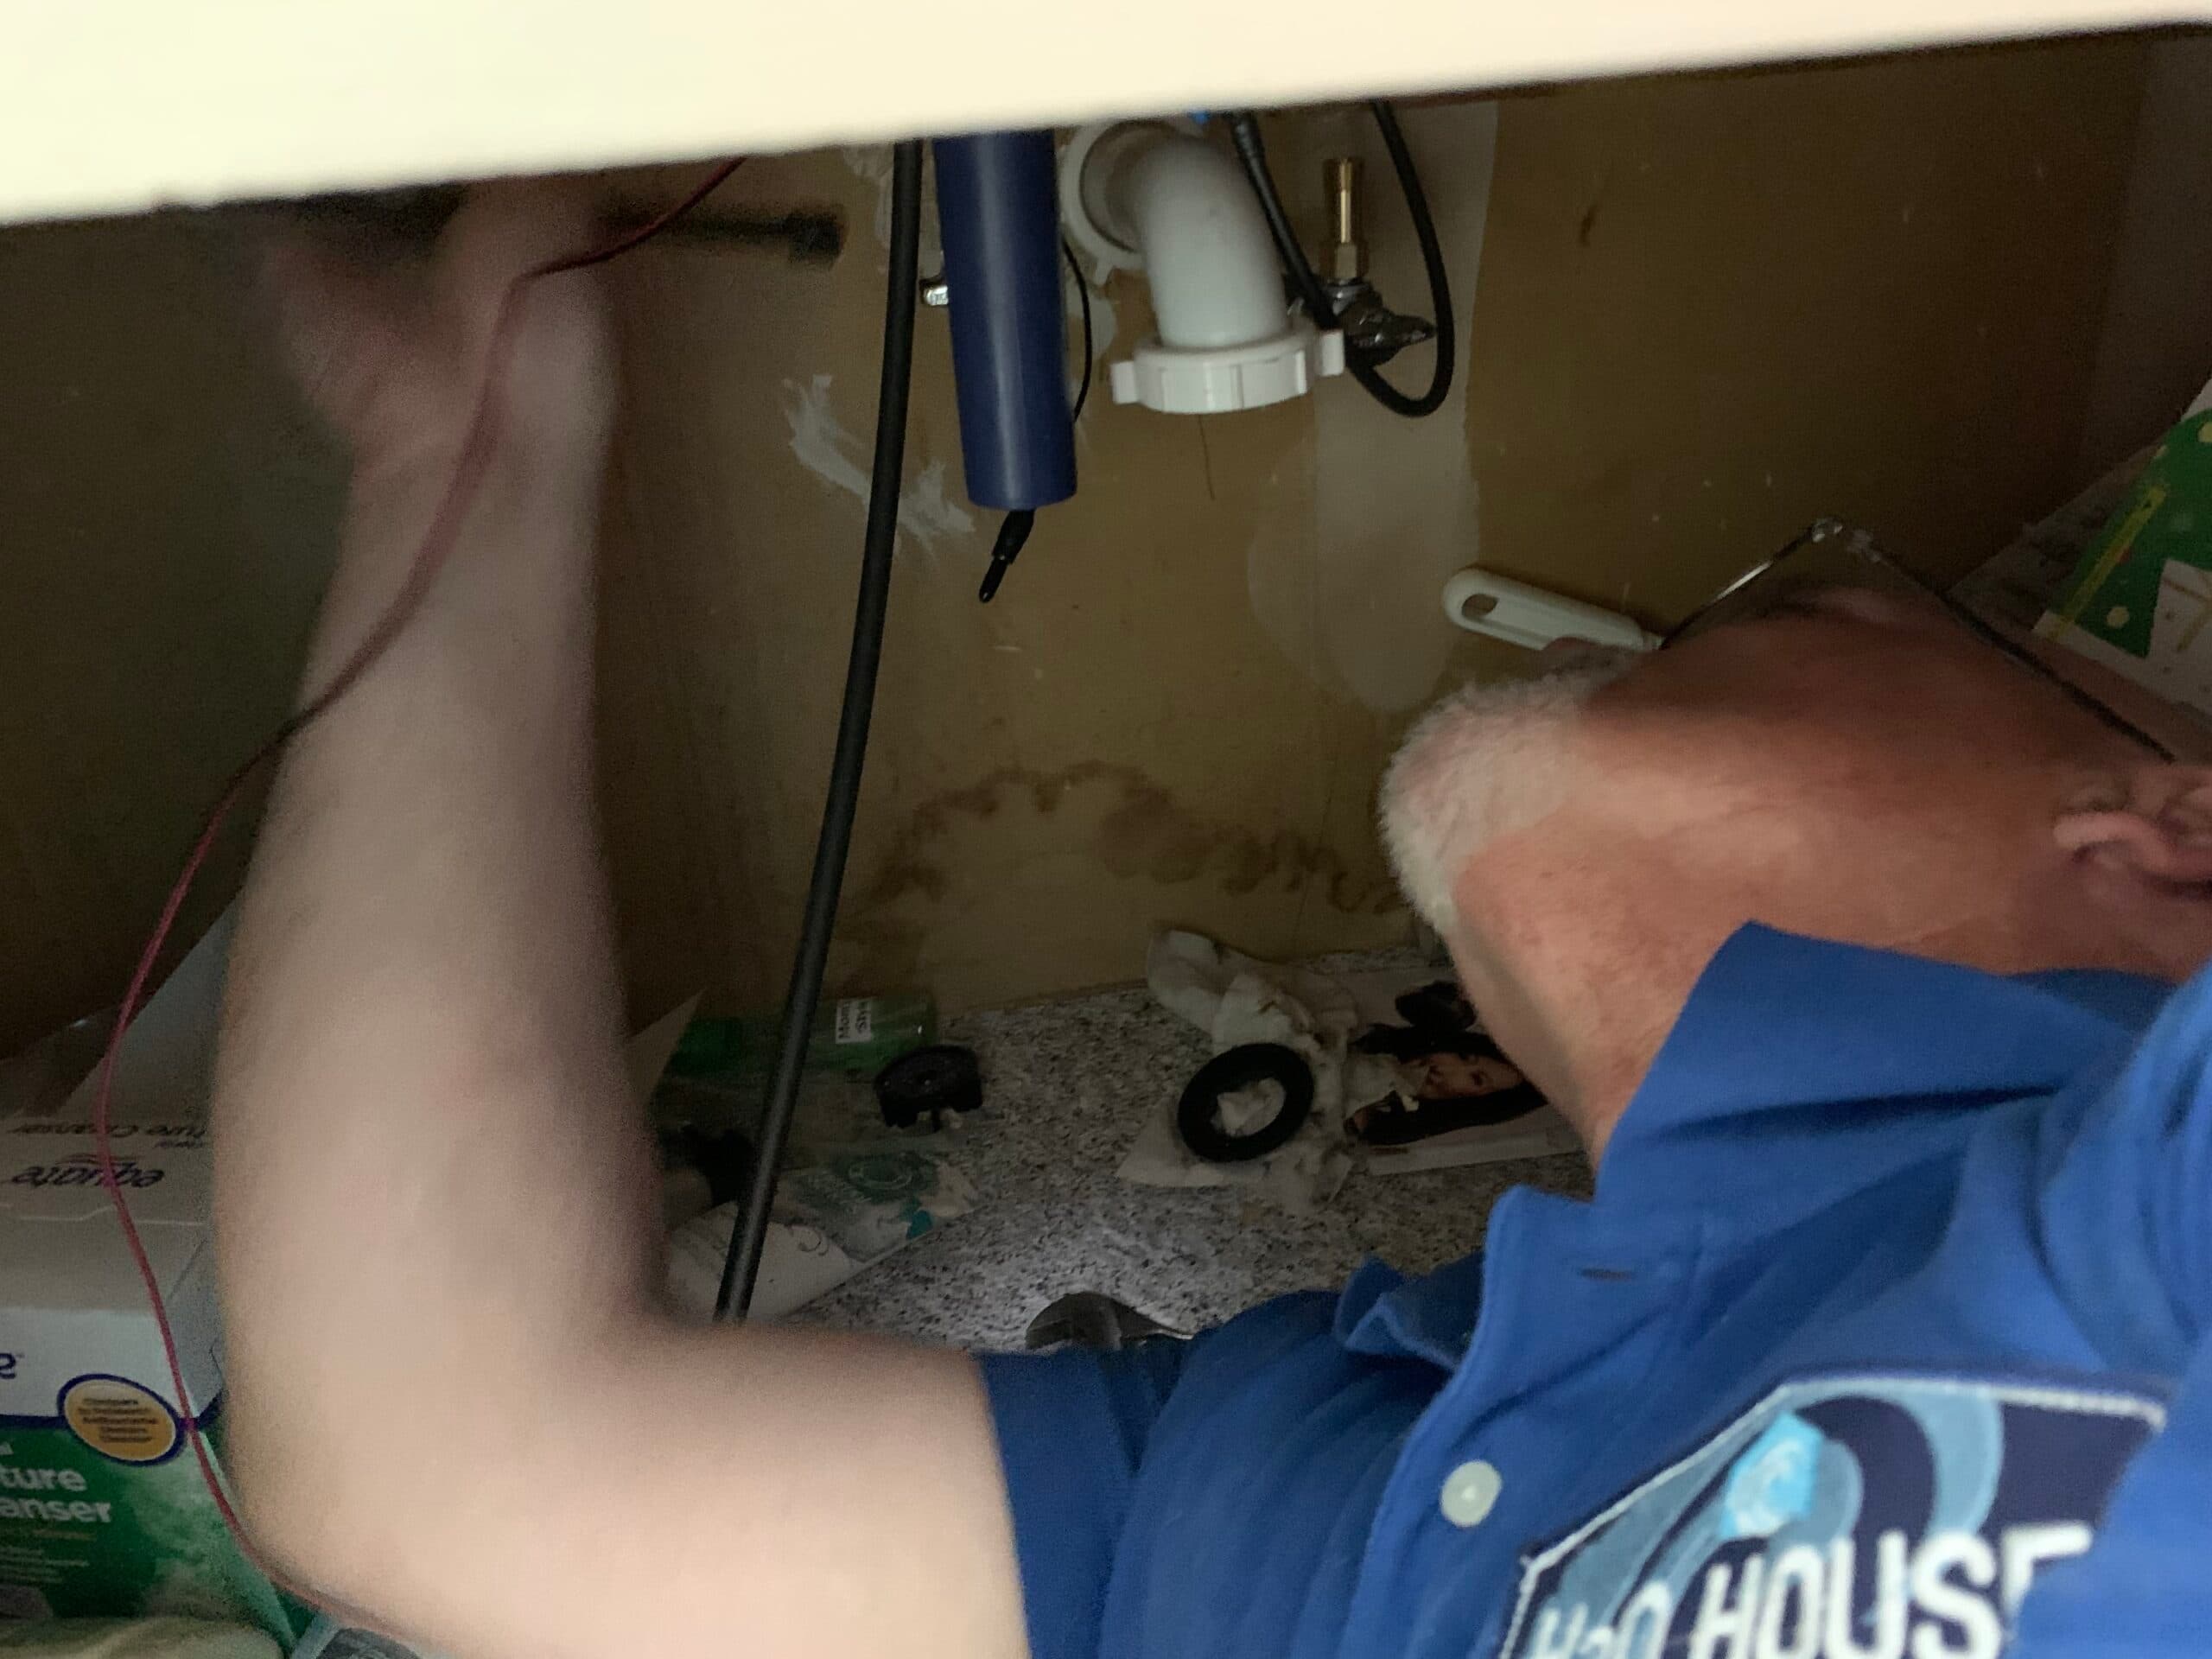 H2Ohouse Plumbing, LLC Plumbing Repair Services by Chris Waterhouse